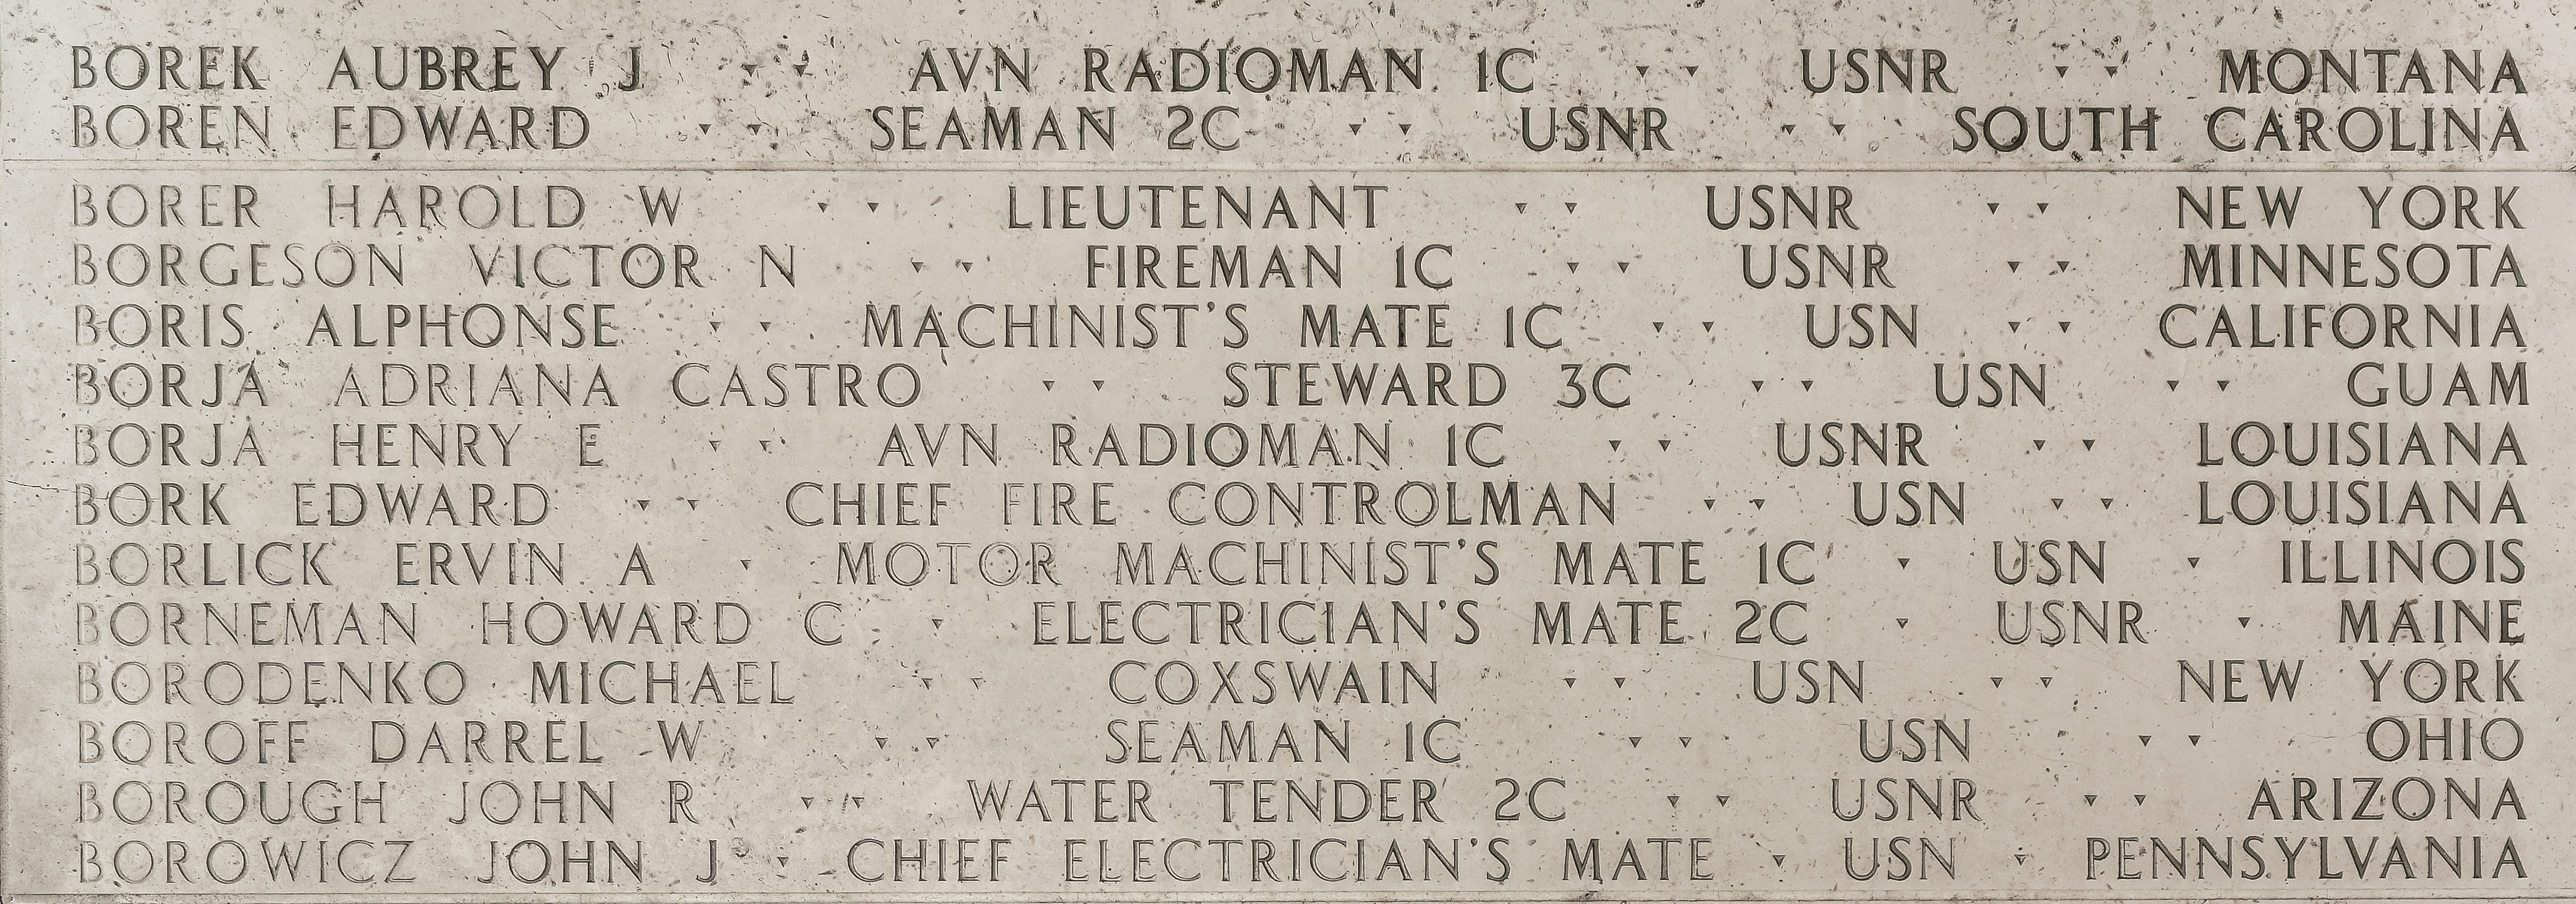 Howard C. Borneman, Electrician's Mate Second Class